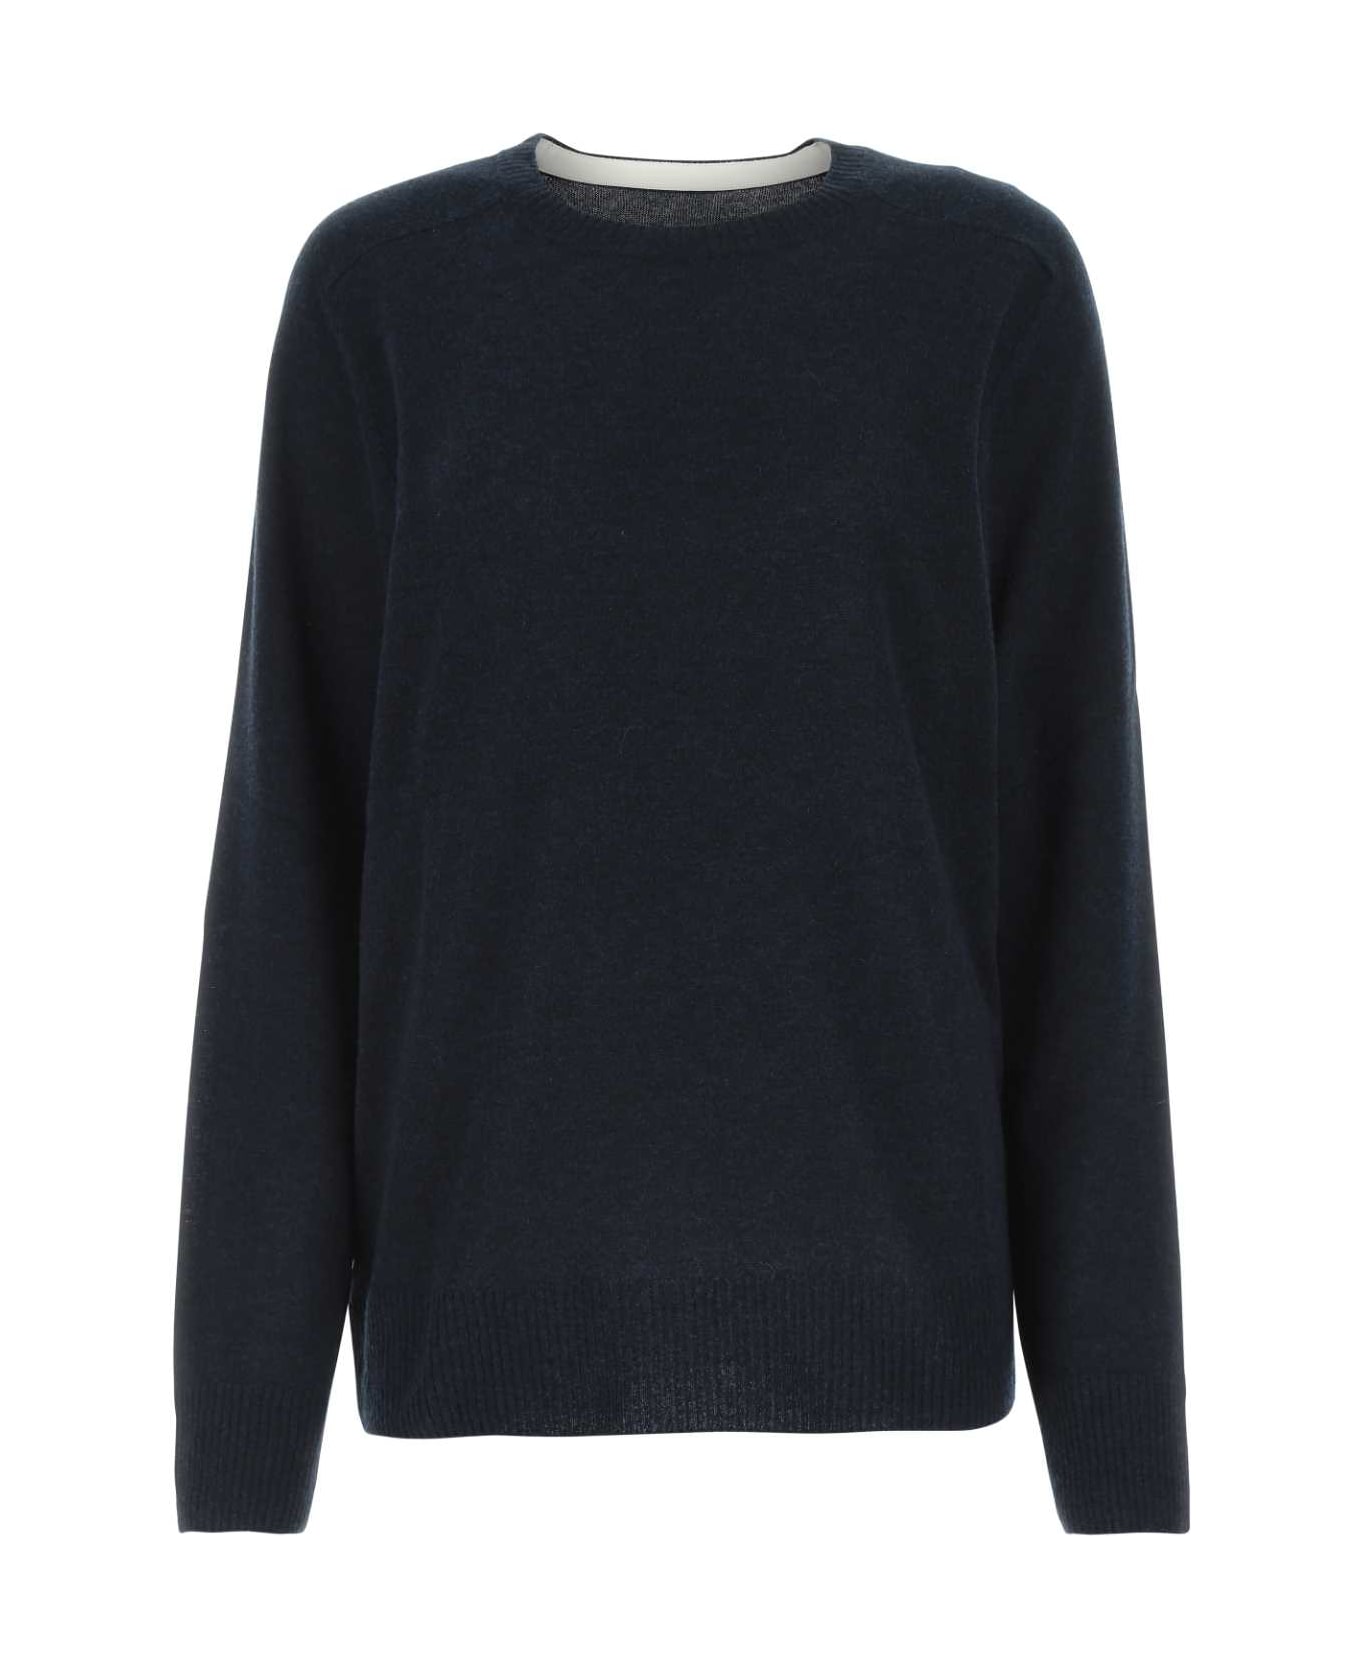 Maison Margiela Navy Blue Wool Blend Sweater - 505